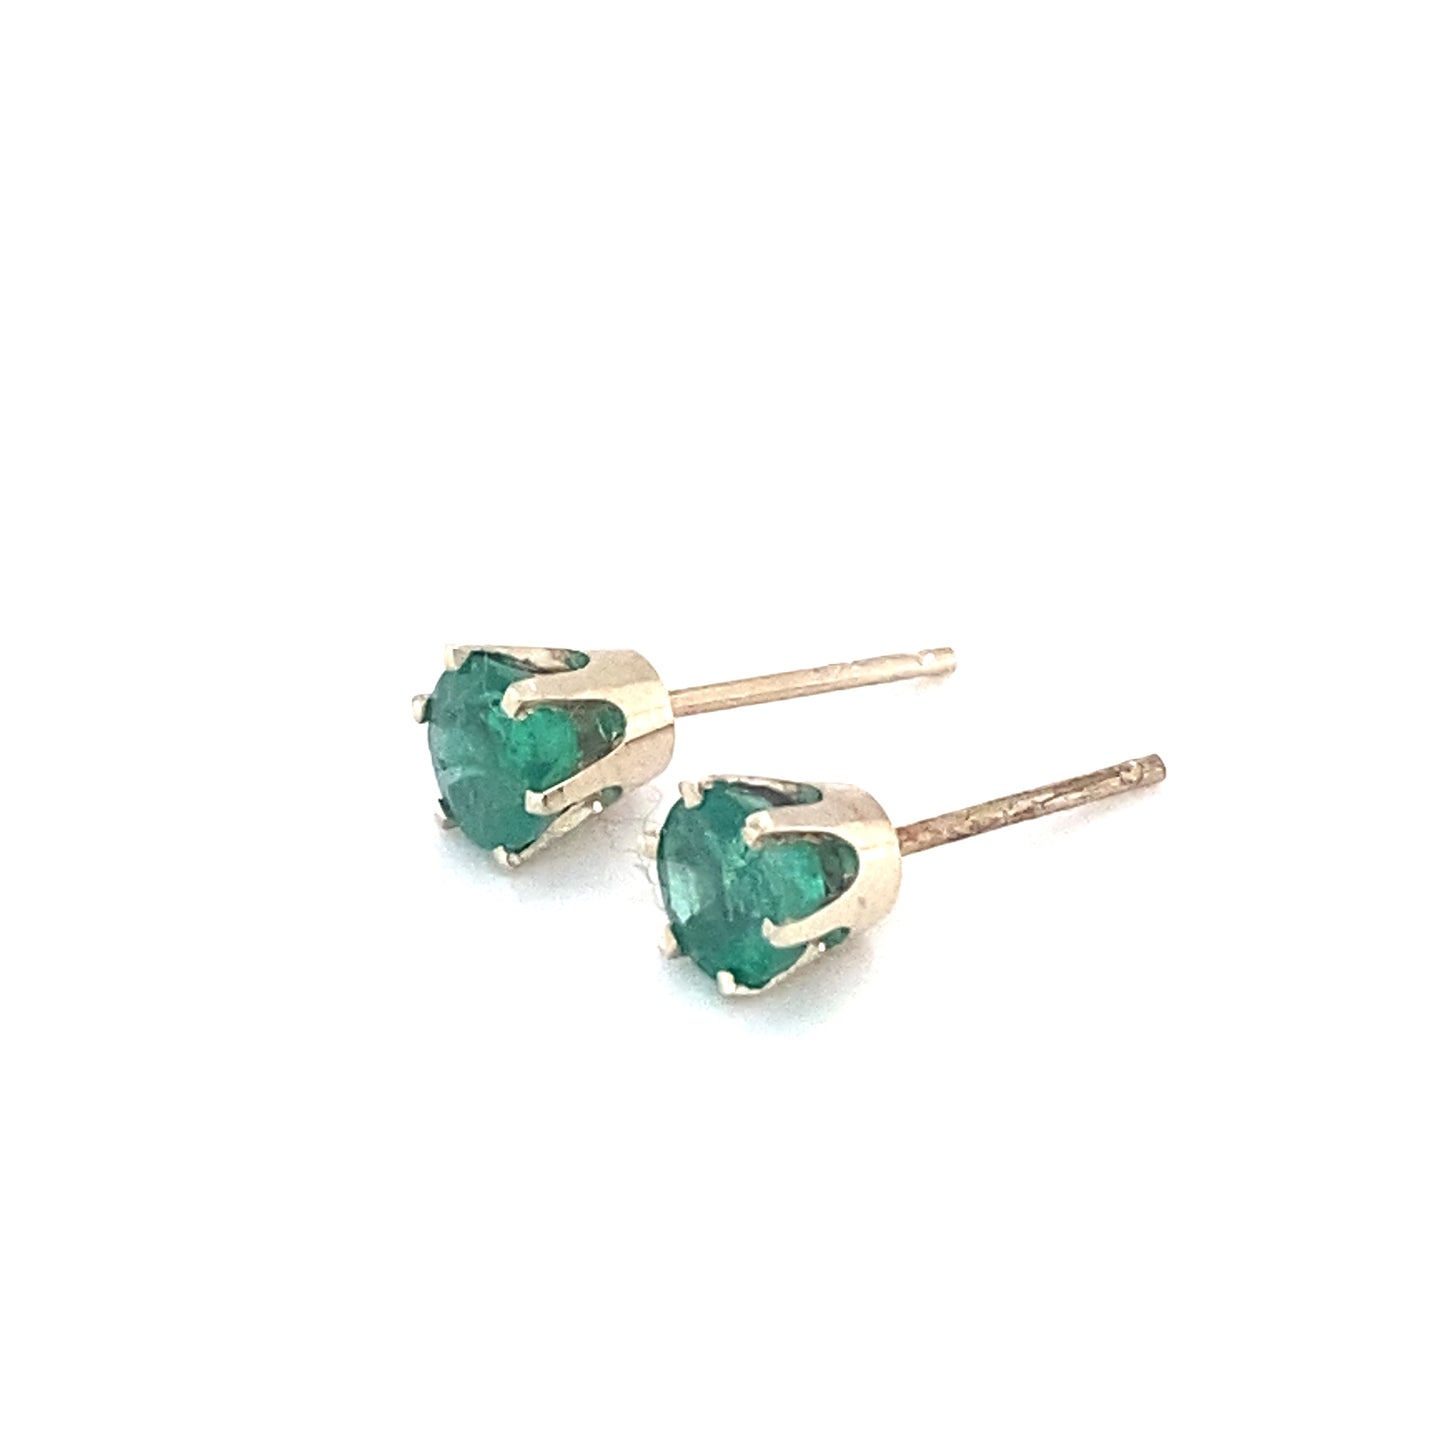 Circa 1960s 1.0 Carat Colombian Emerald Stud Earrings in 14K White Gold